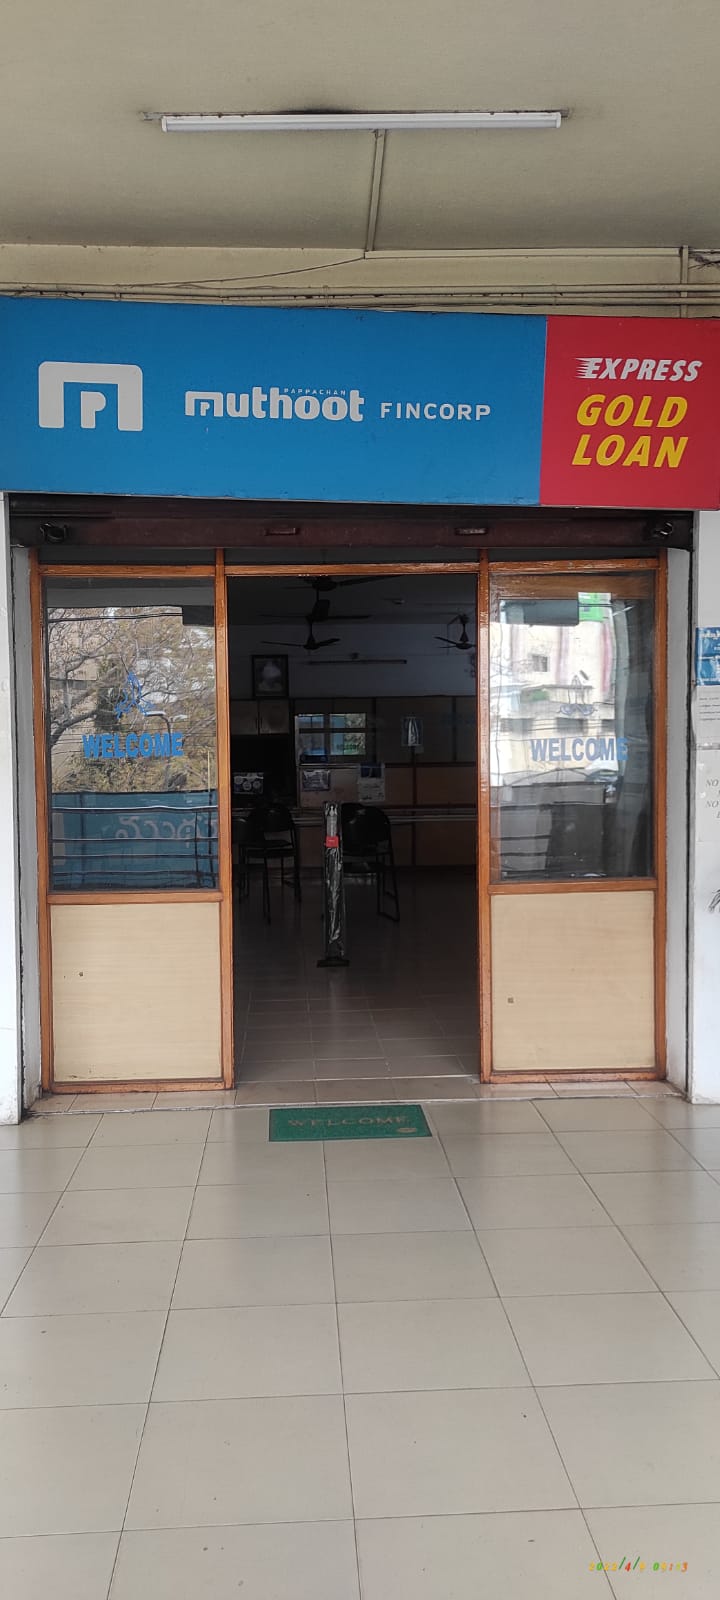 Muthoot Fincorp Gold Loan Services in Main Road, Guntur, Andhra Pradesh